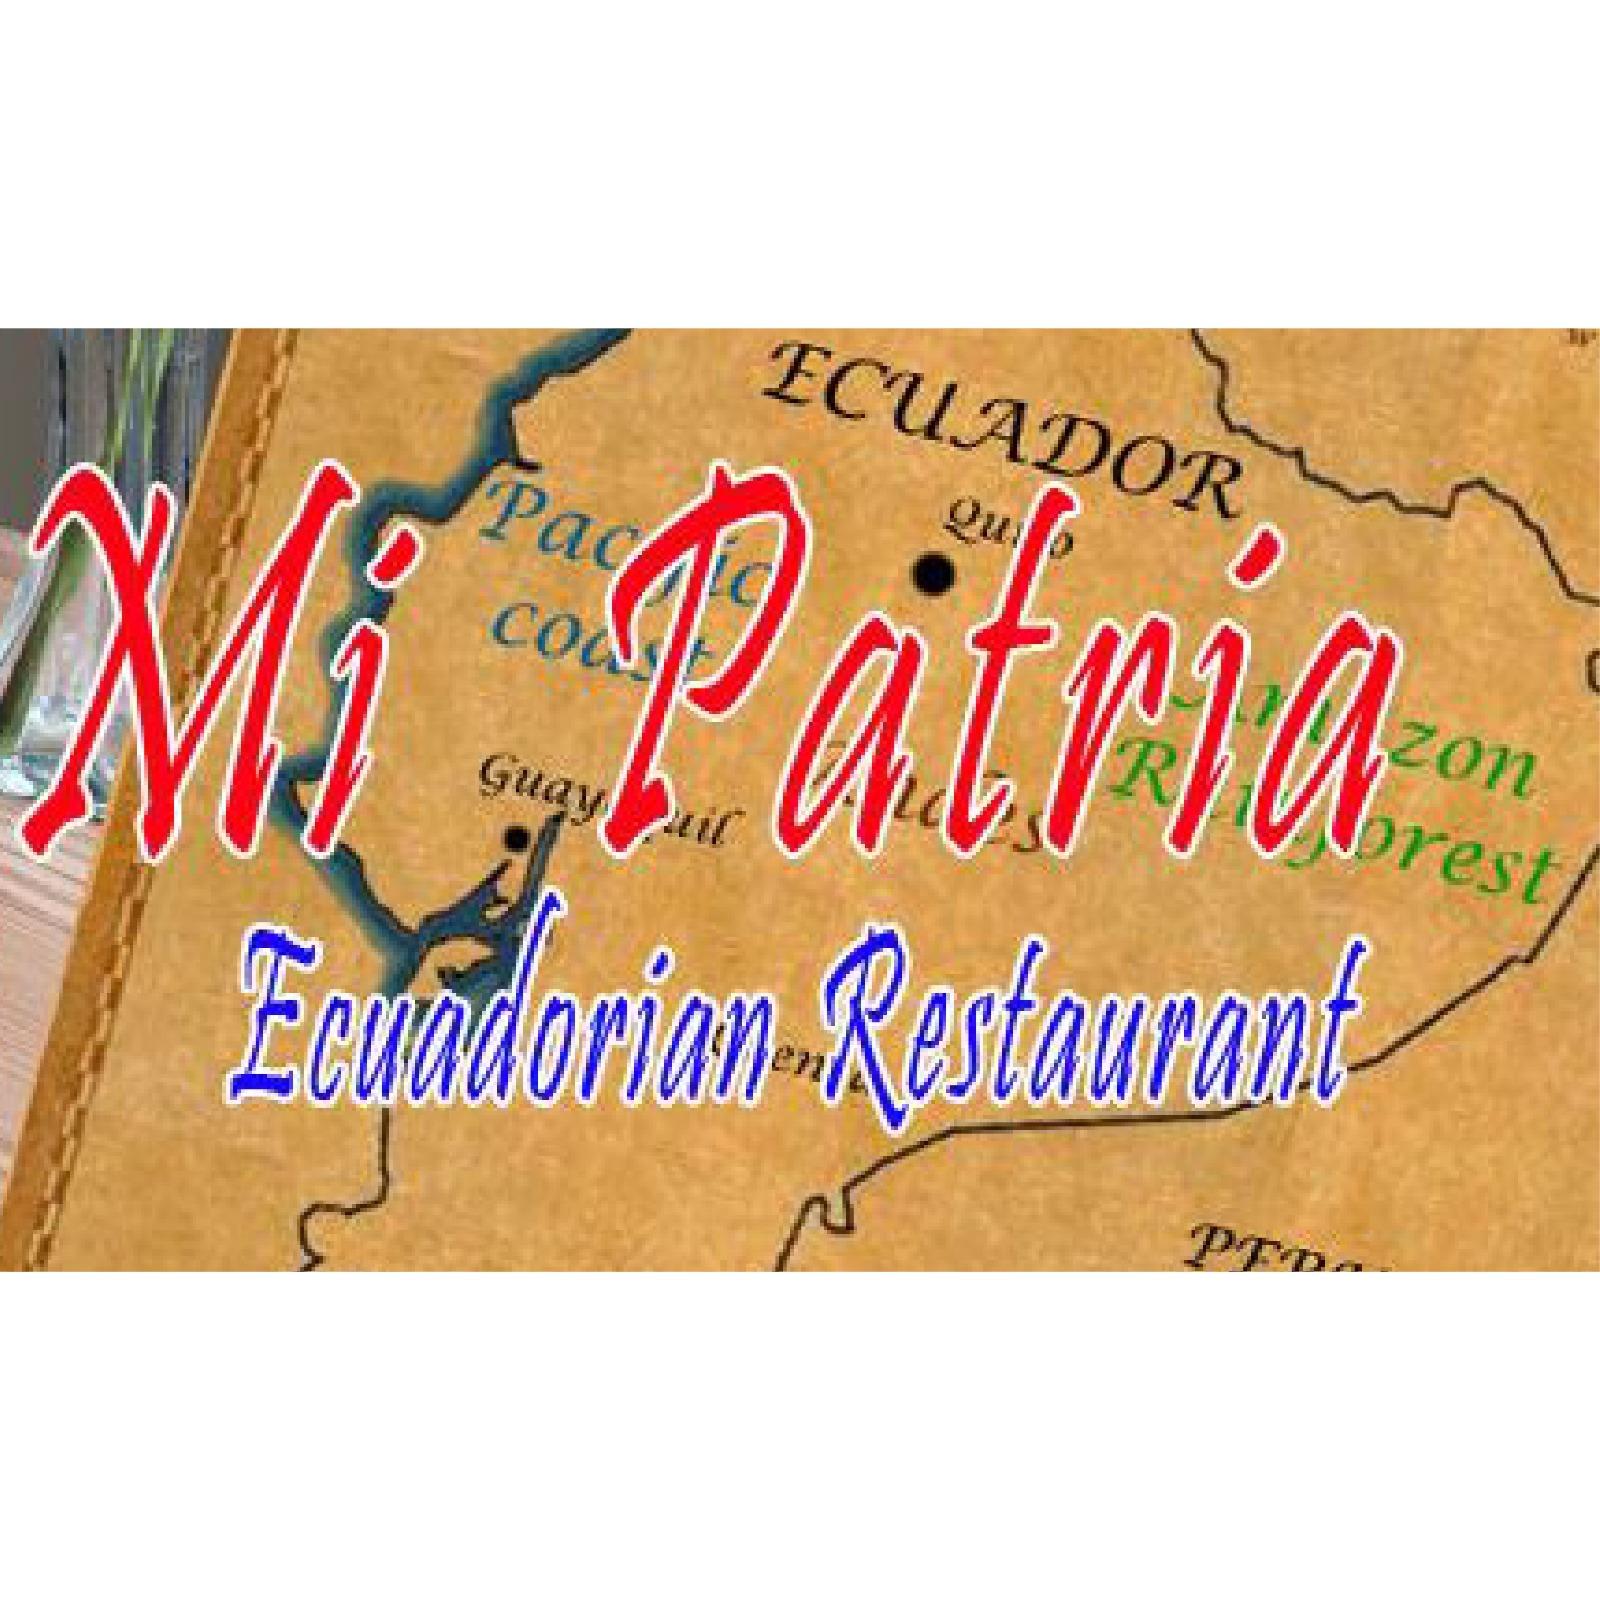 Mi Patria Ecuadorian Restaurant